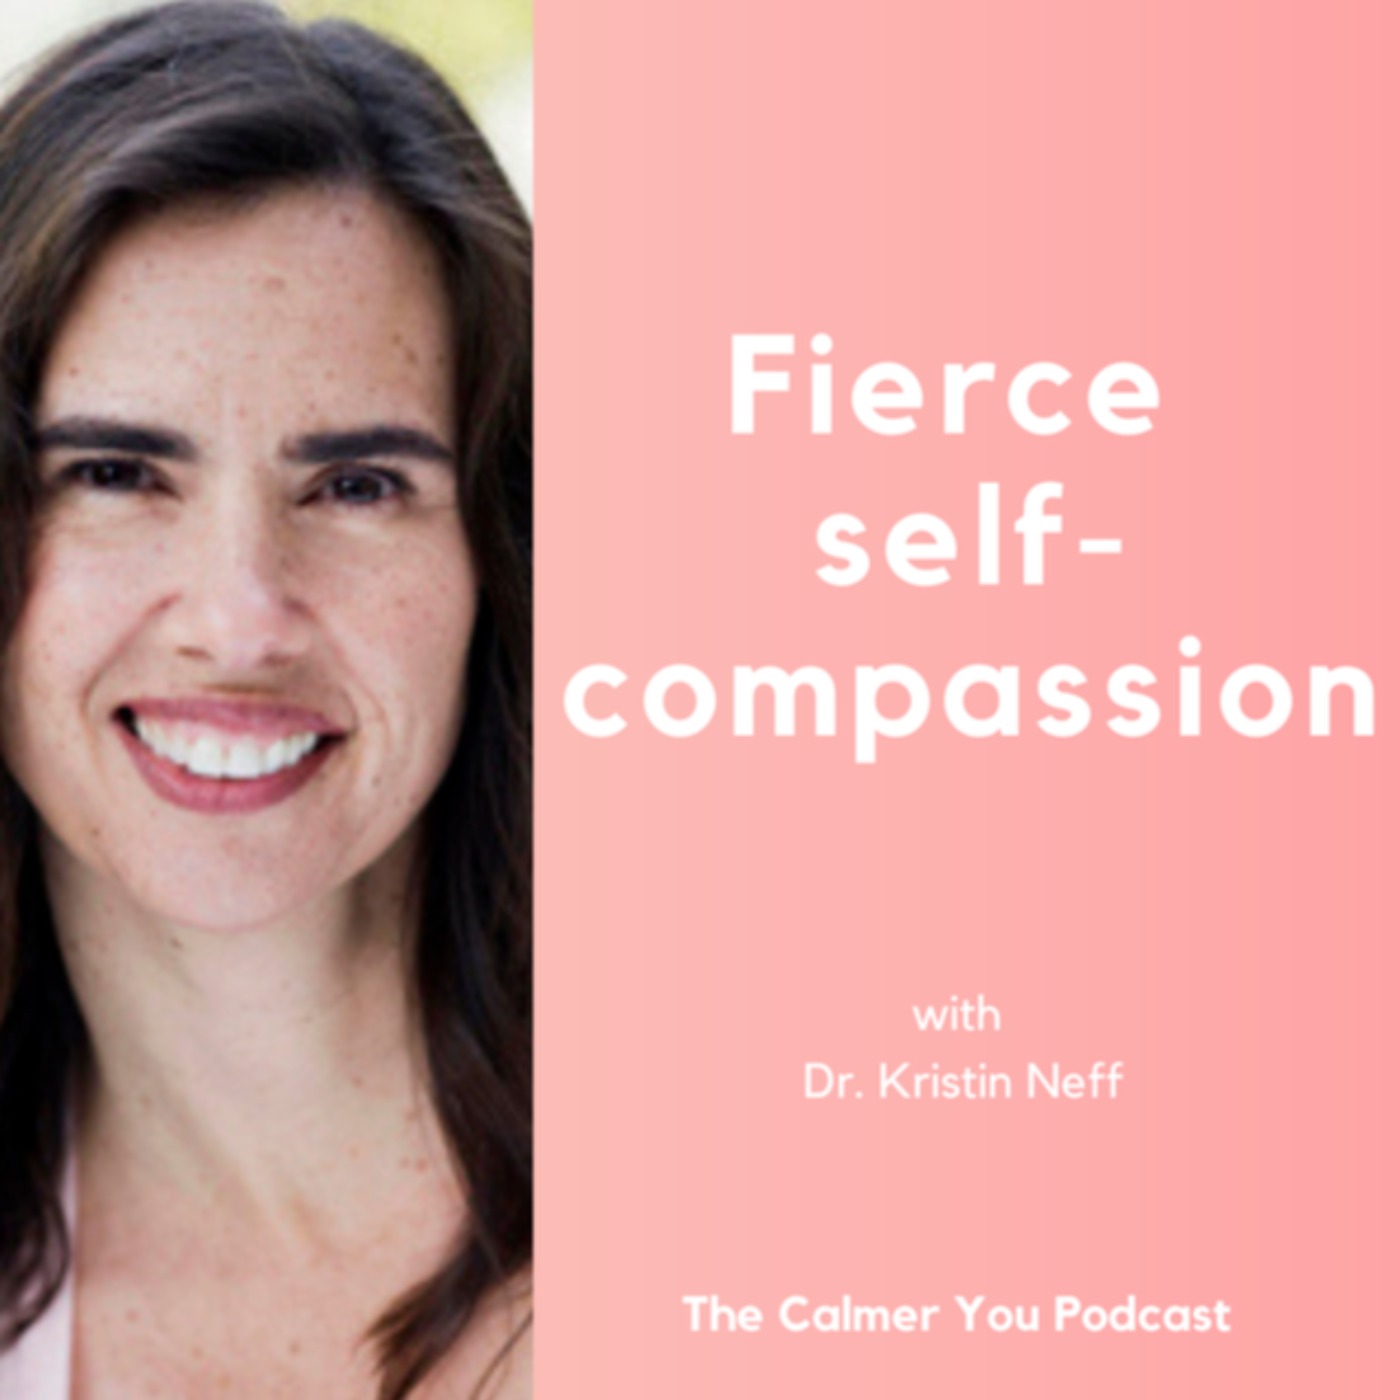 Ep 156. Fierce self-compassion with Dr. Kristin Neff